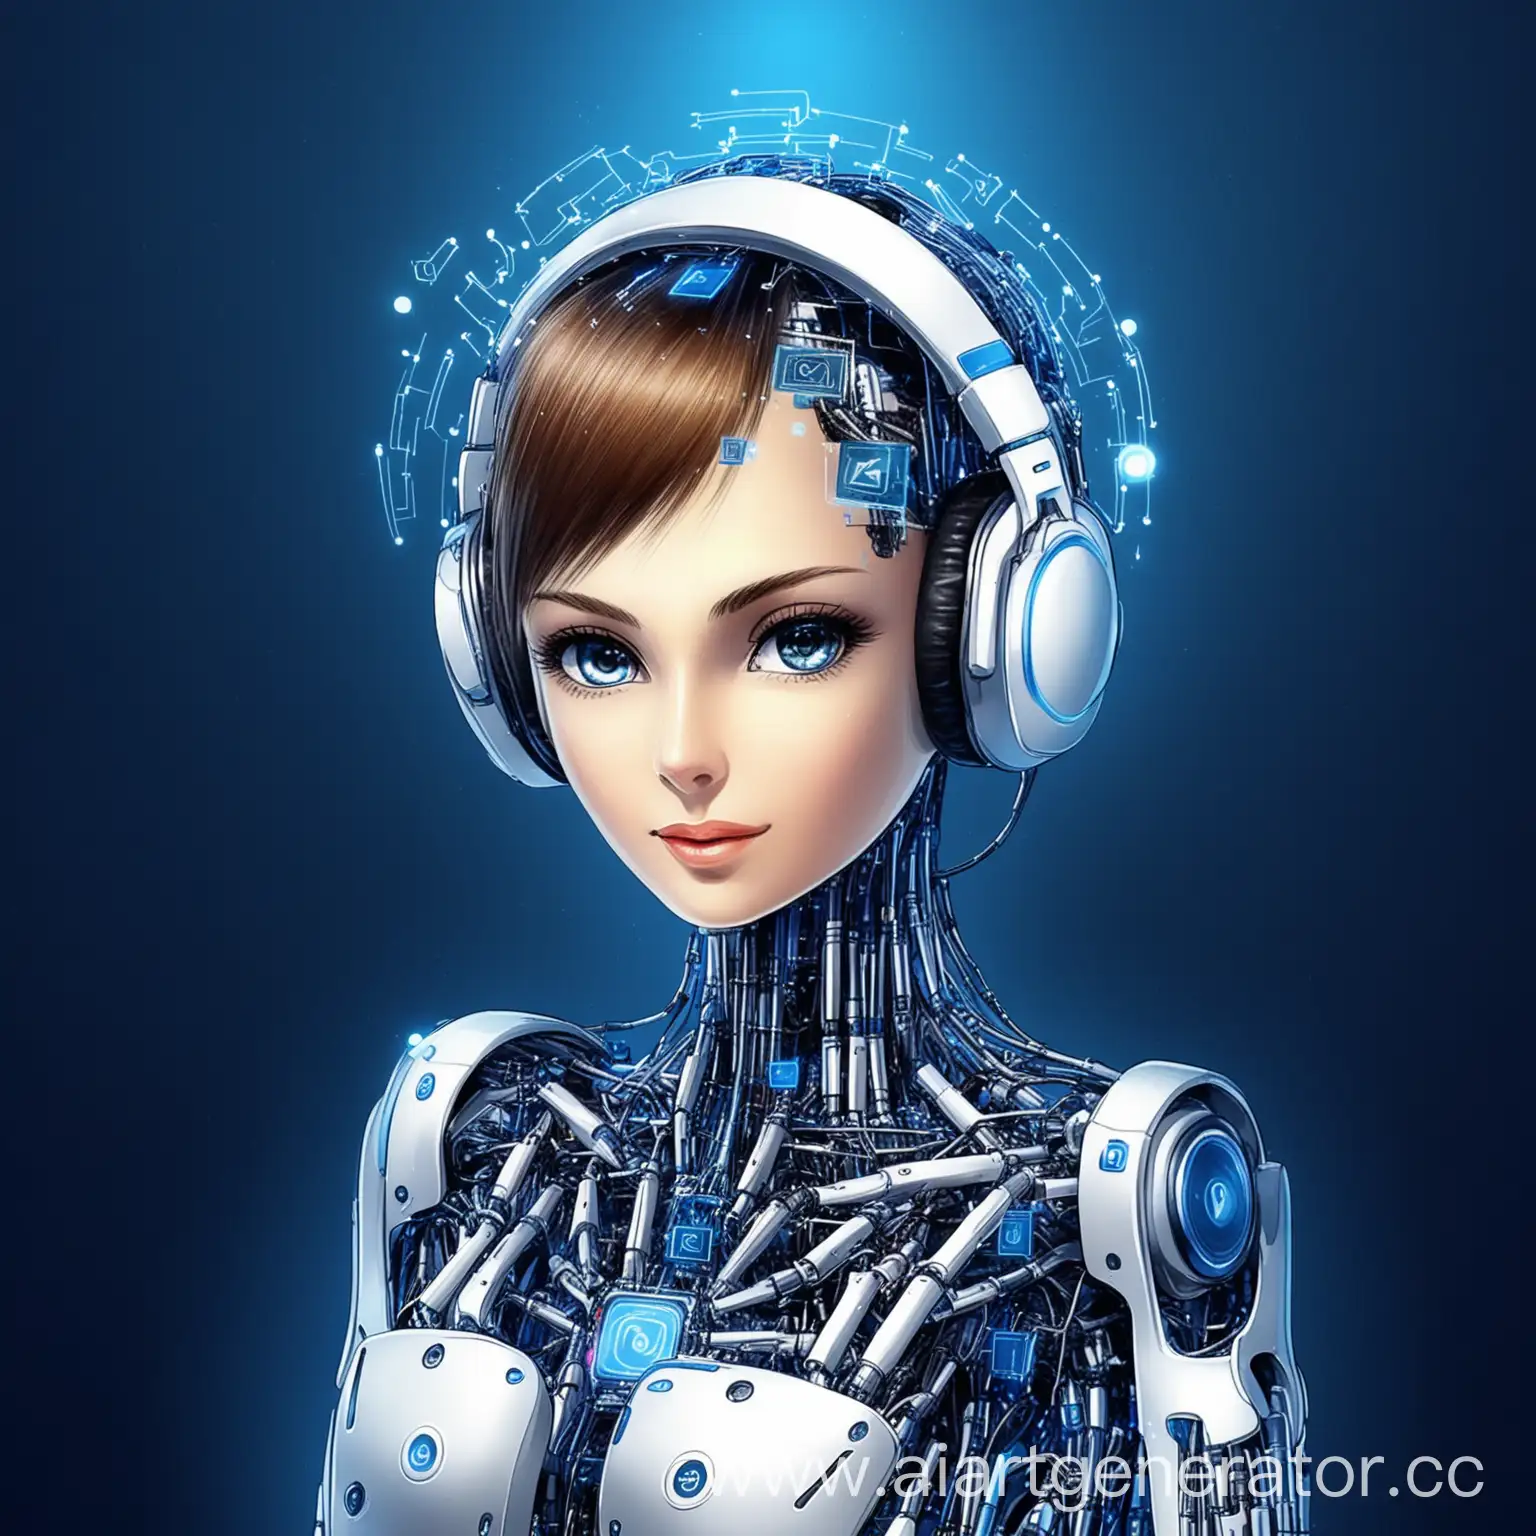 Artificial-Intelligence-Generates-Custom-Songs-on-Demand-AlMusic